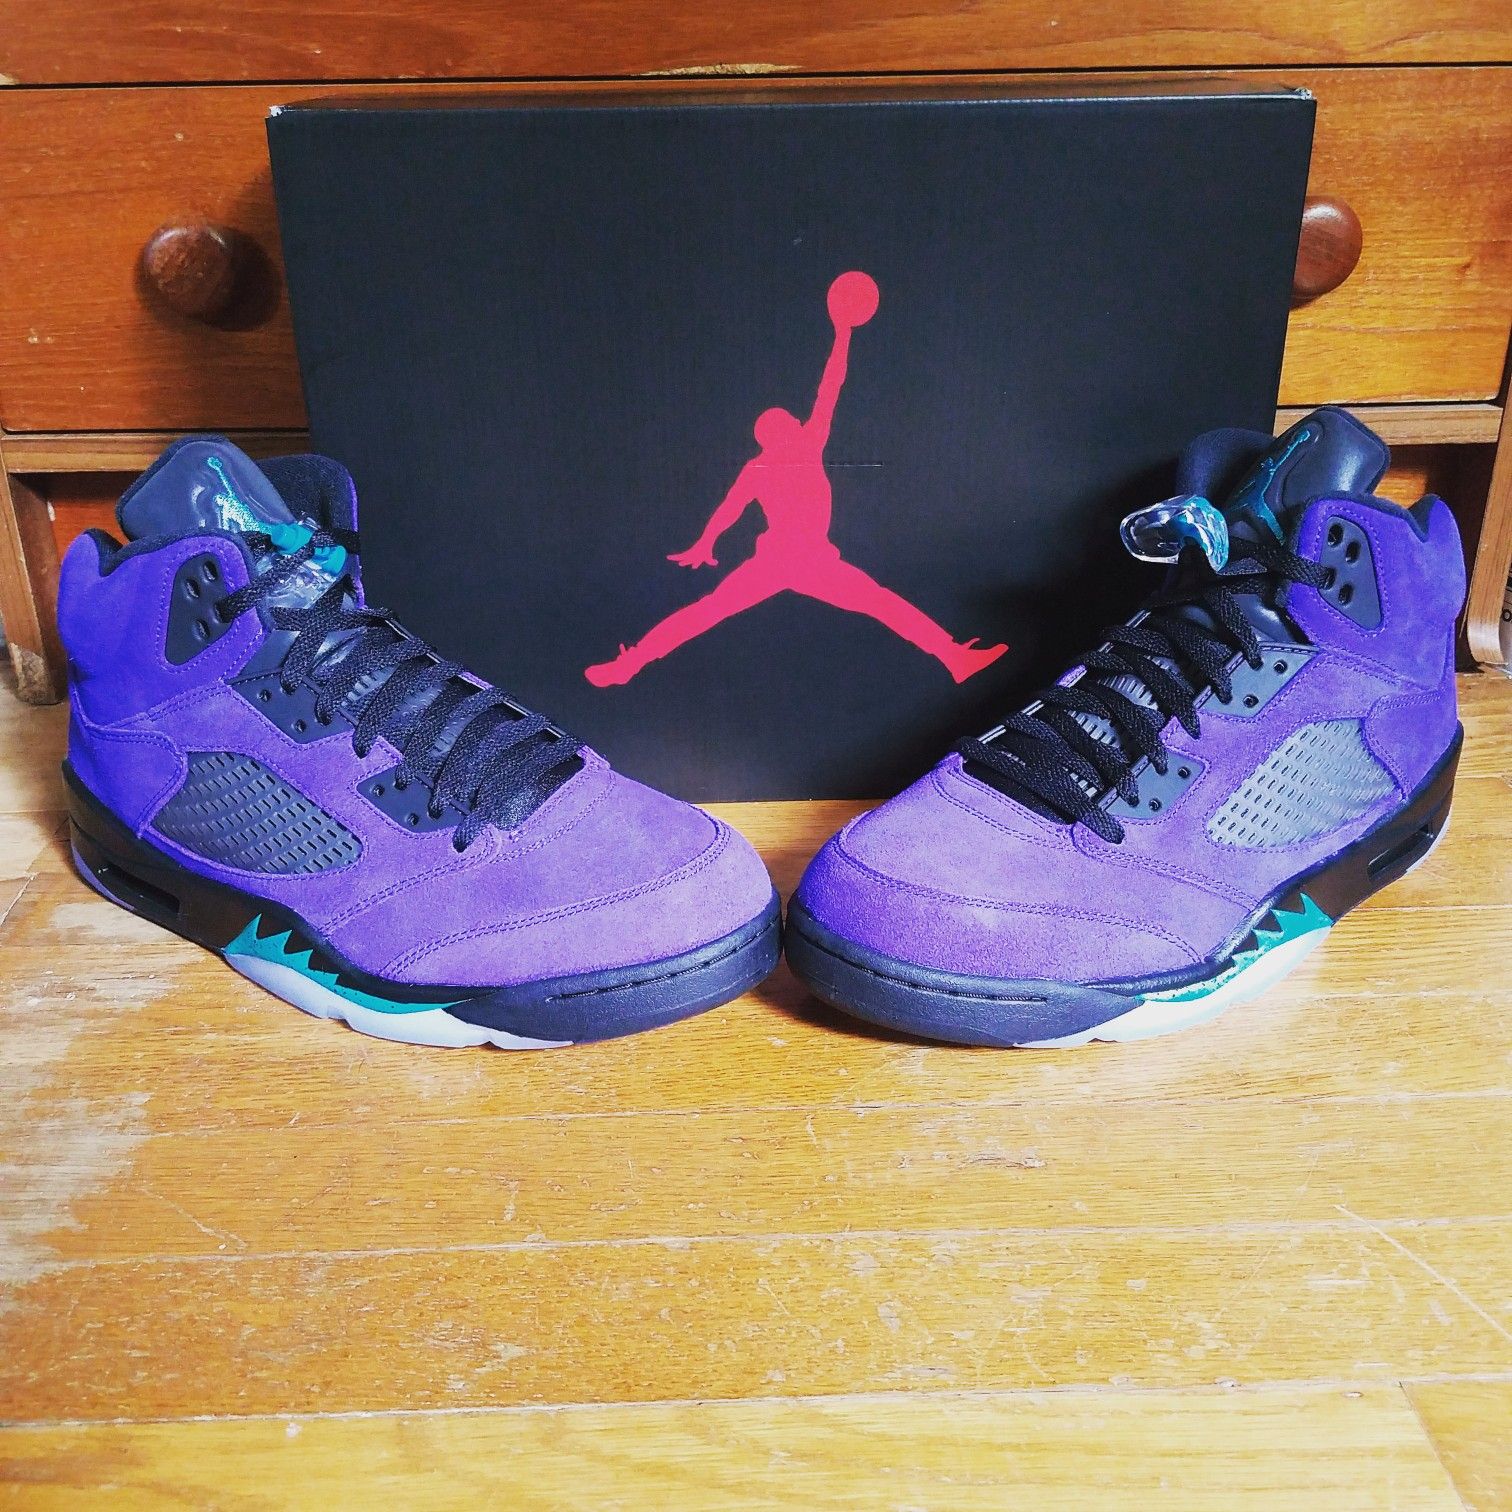 Nike Jordan 5 Alternate Grape Size 12.5